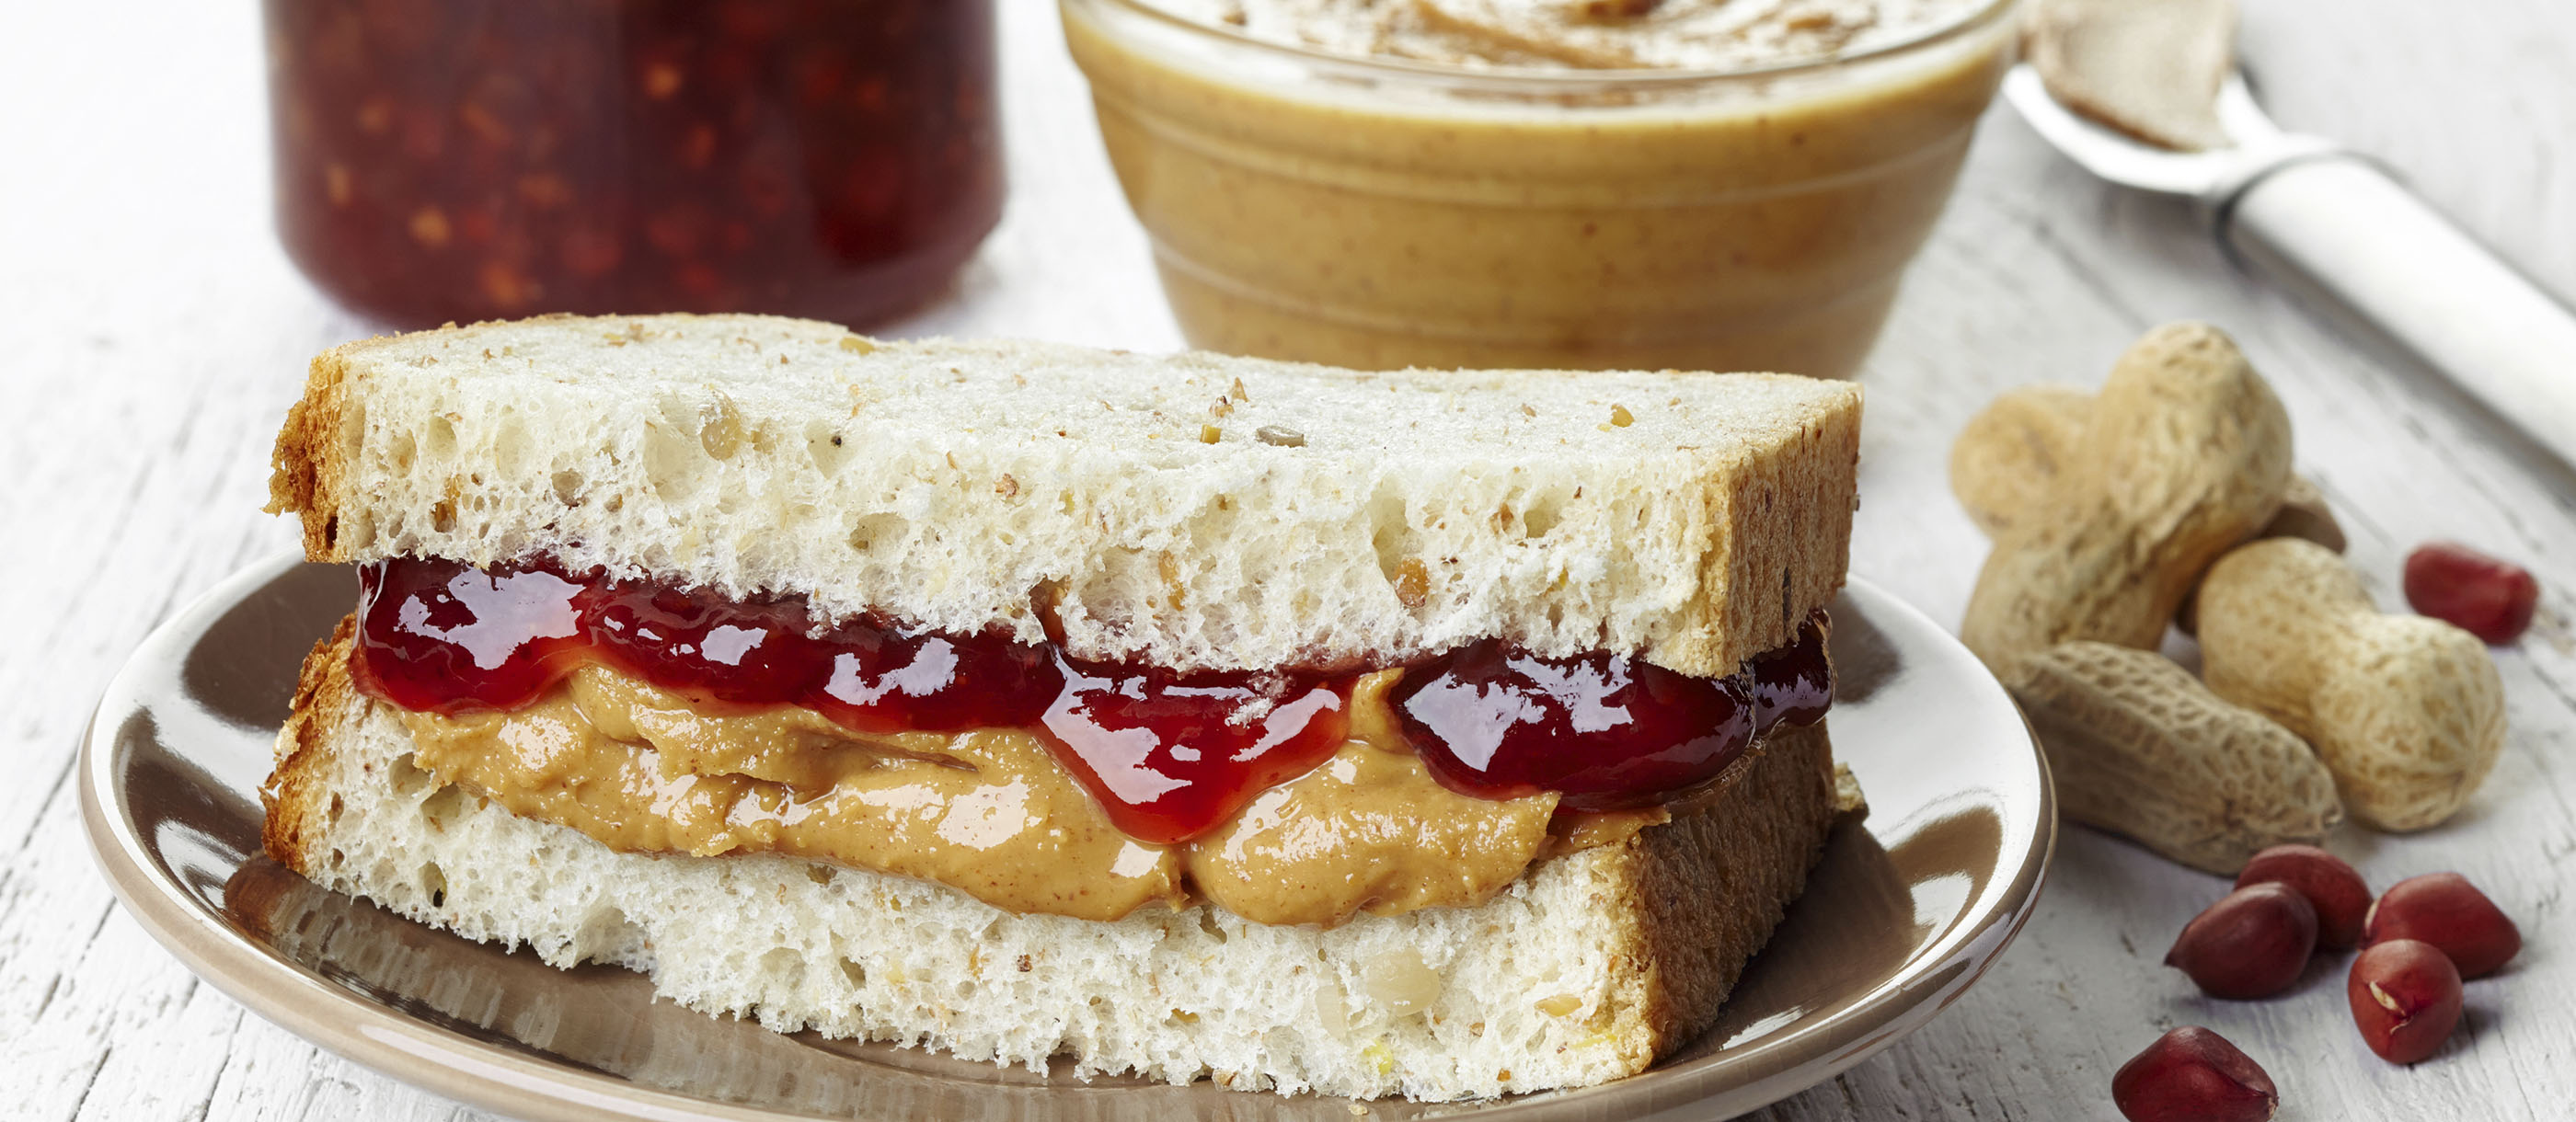 Peanut Butter And Jelly Sandwich Authentic Recipe Tasteatlas